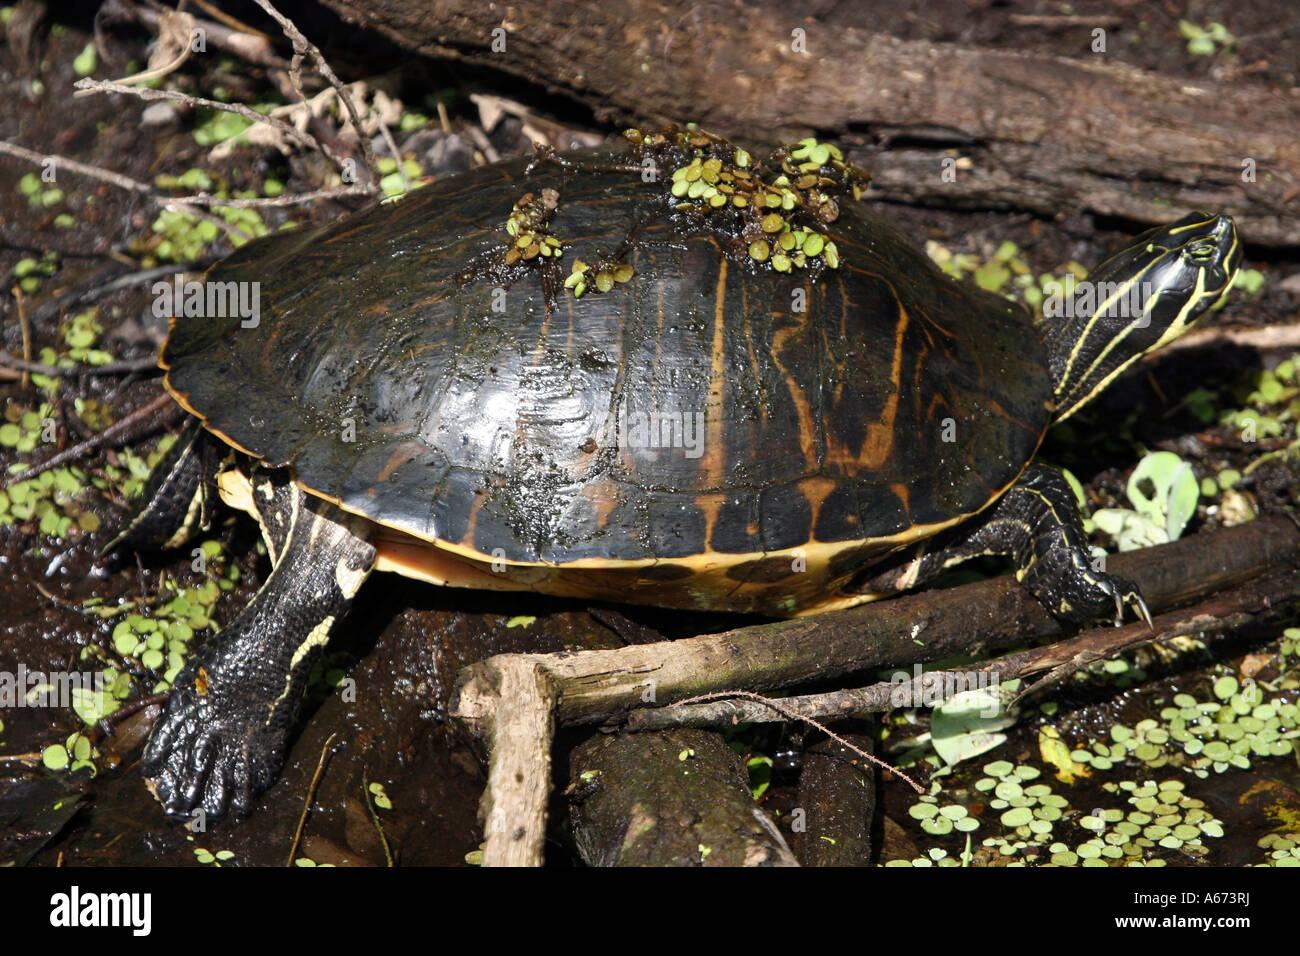 Florida Redbelly Turtle Southwest Florida Stock Photo